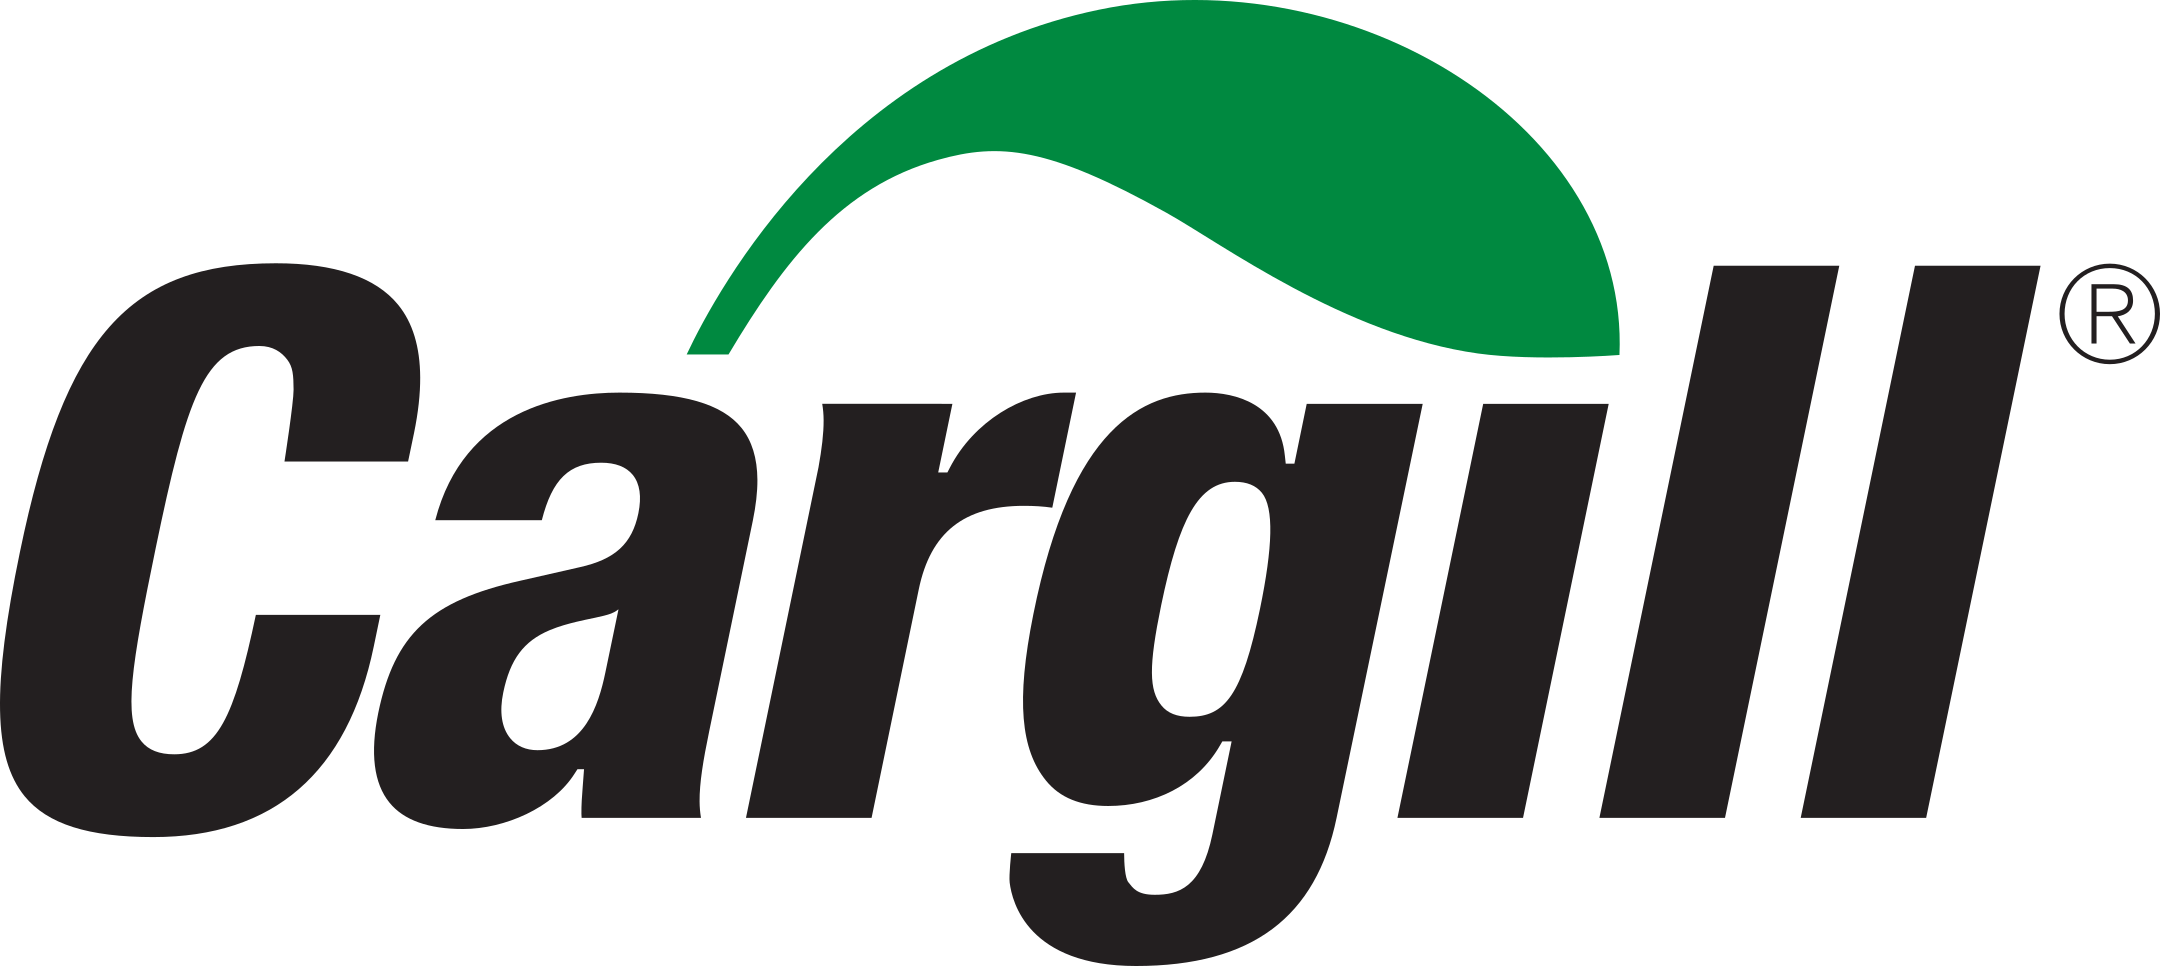 Cargill Logo - PNG e Vetor - Download de Logo